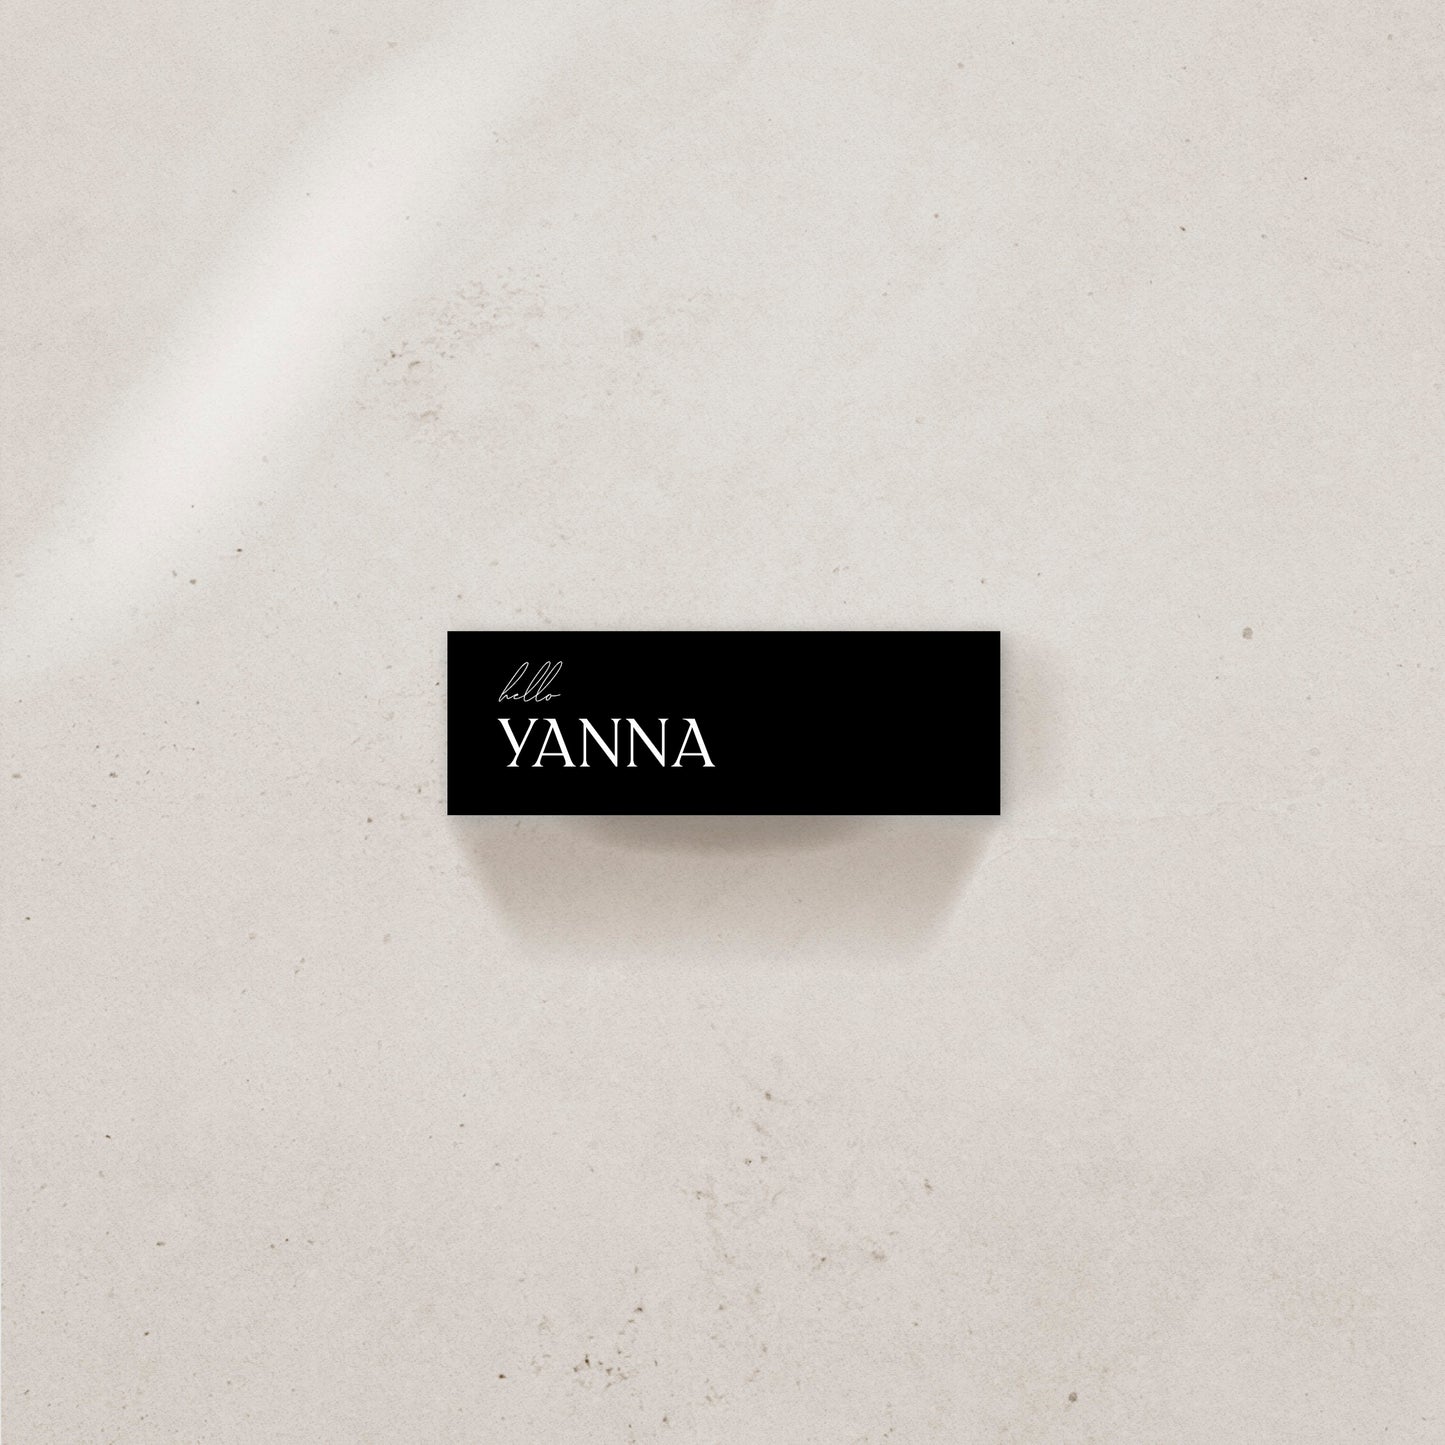 Yanna Place Cards